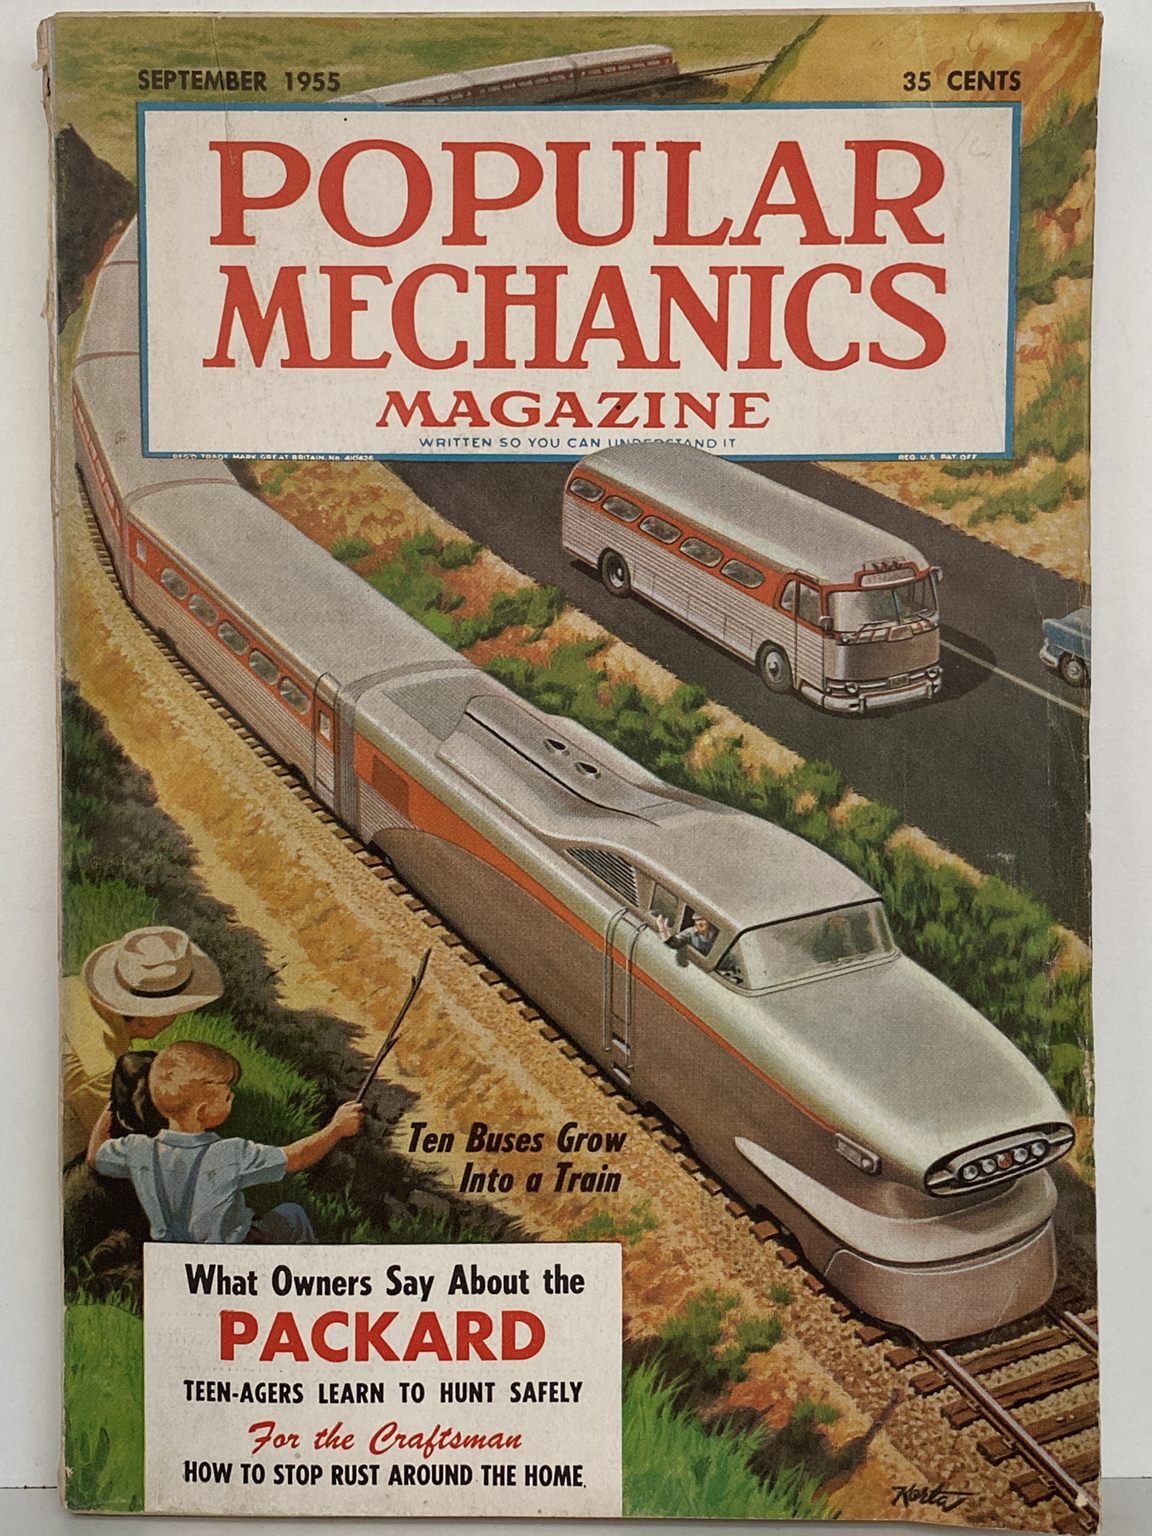 VINTAGE MAGAZINE: Popular Mechanics - Vol. 104, No. 3 - September 1955